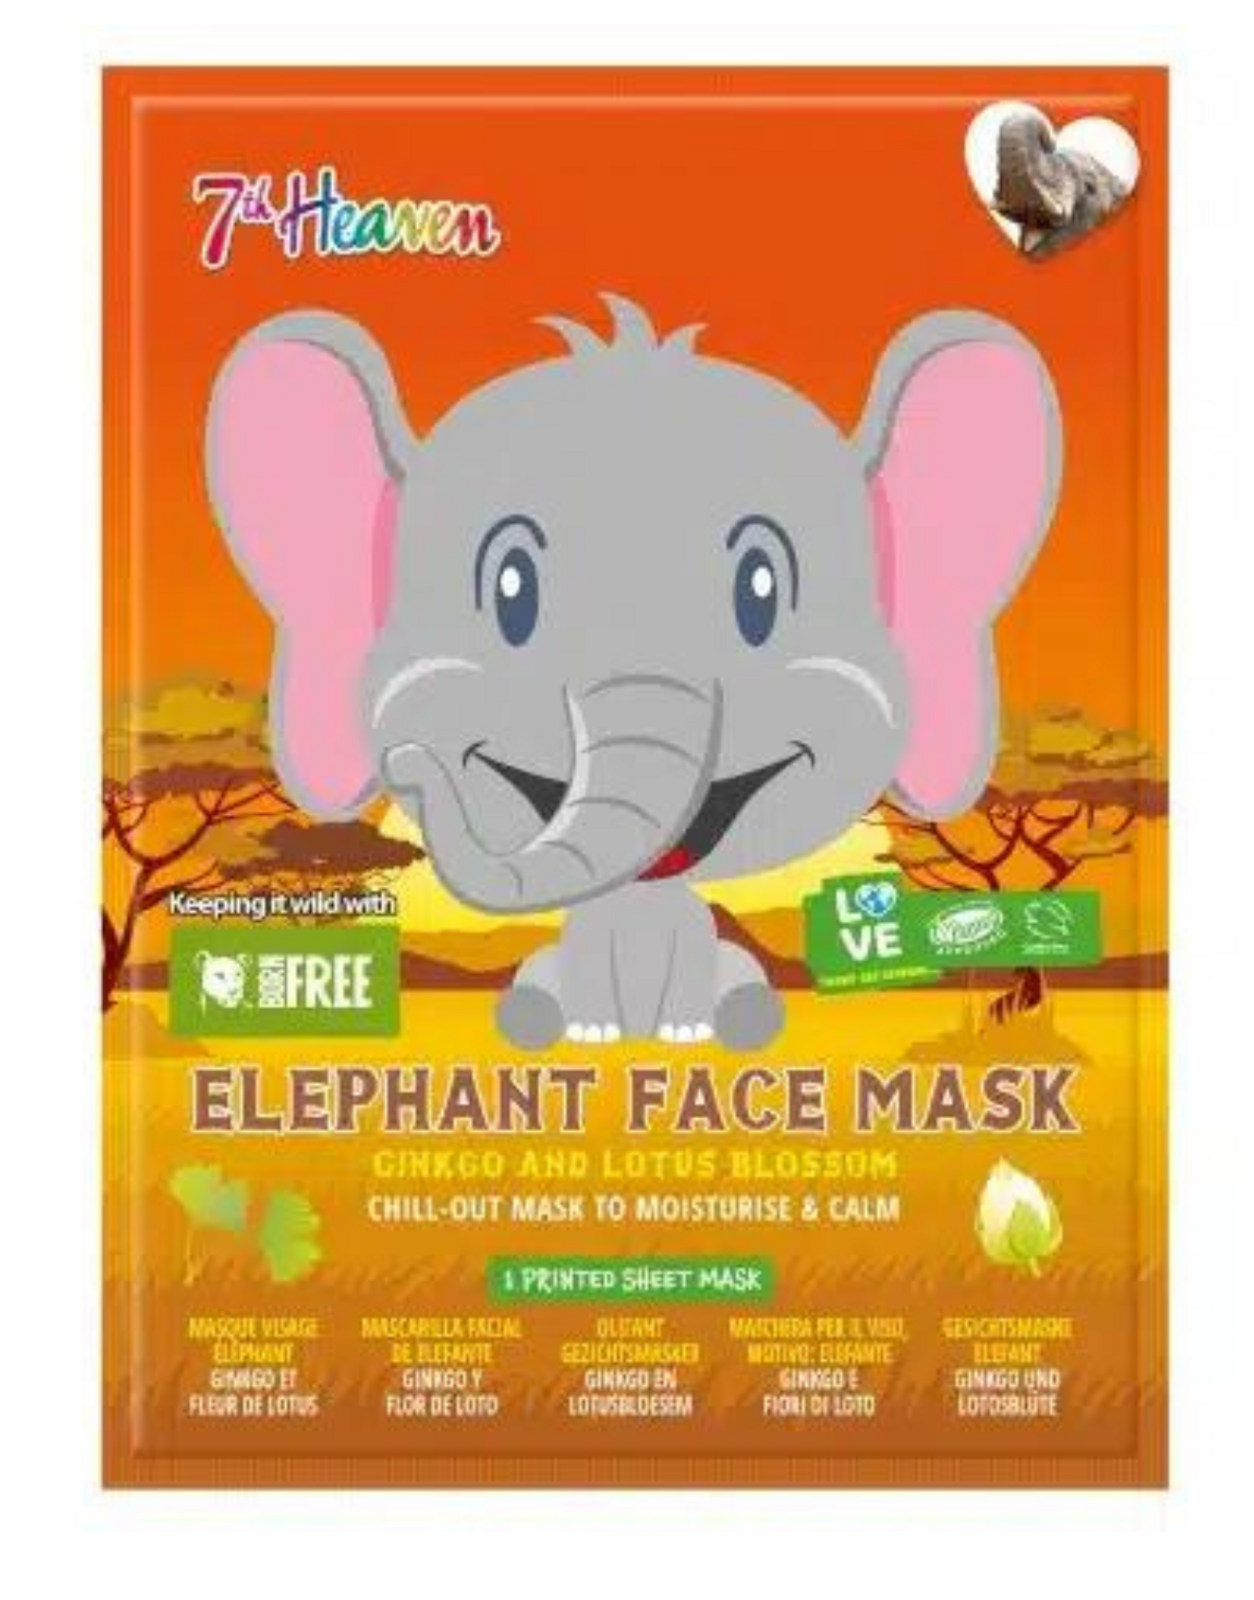 Montagne Jeunesse 7th Heaven Elephant Face Mask Ginkgo & Lotus Blossom